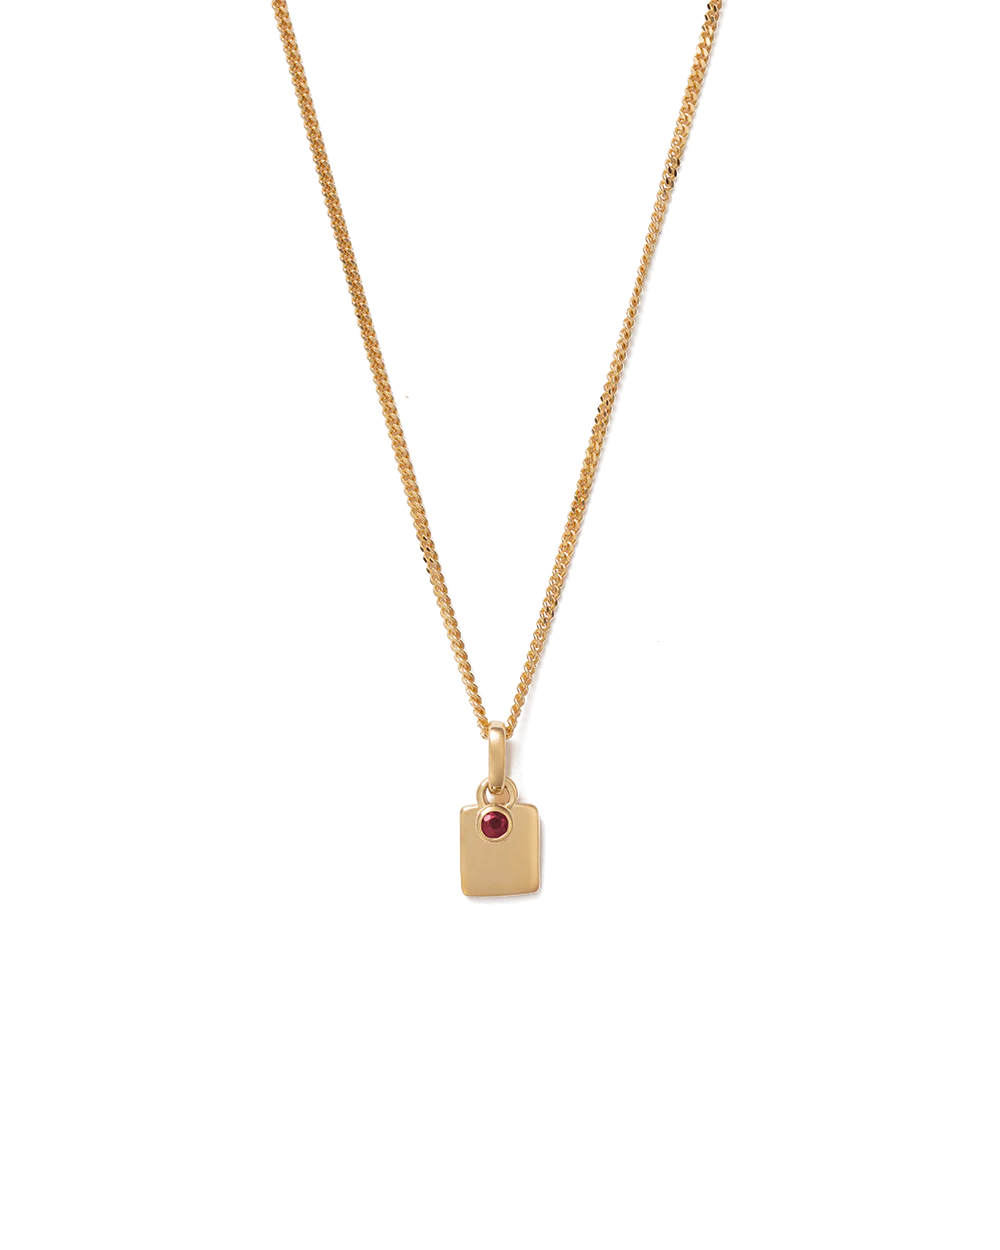 January Birthstone Necklace 18K GOLD VERMEIL/ GARNET